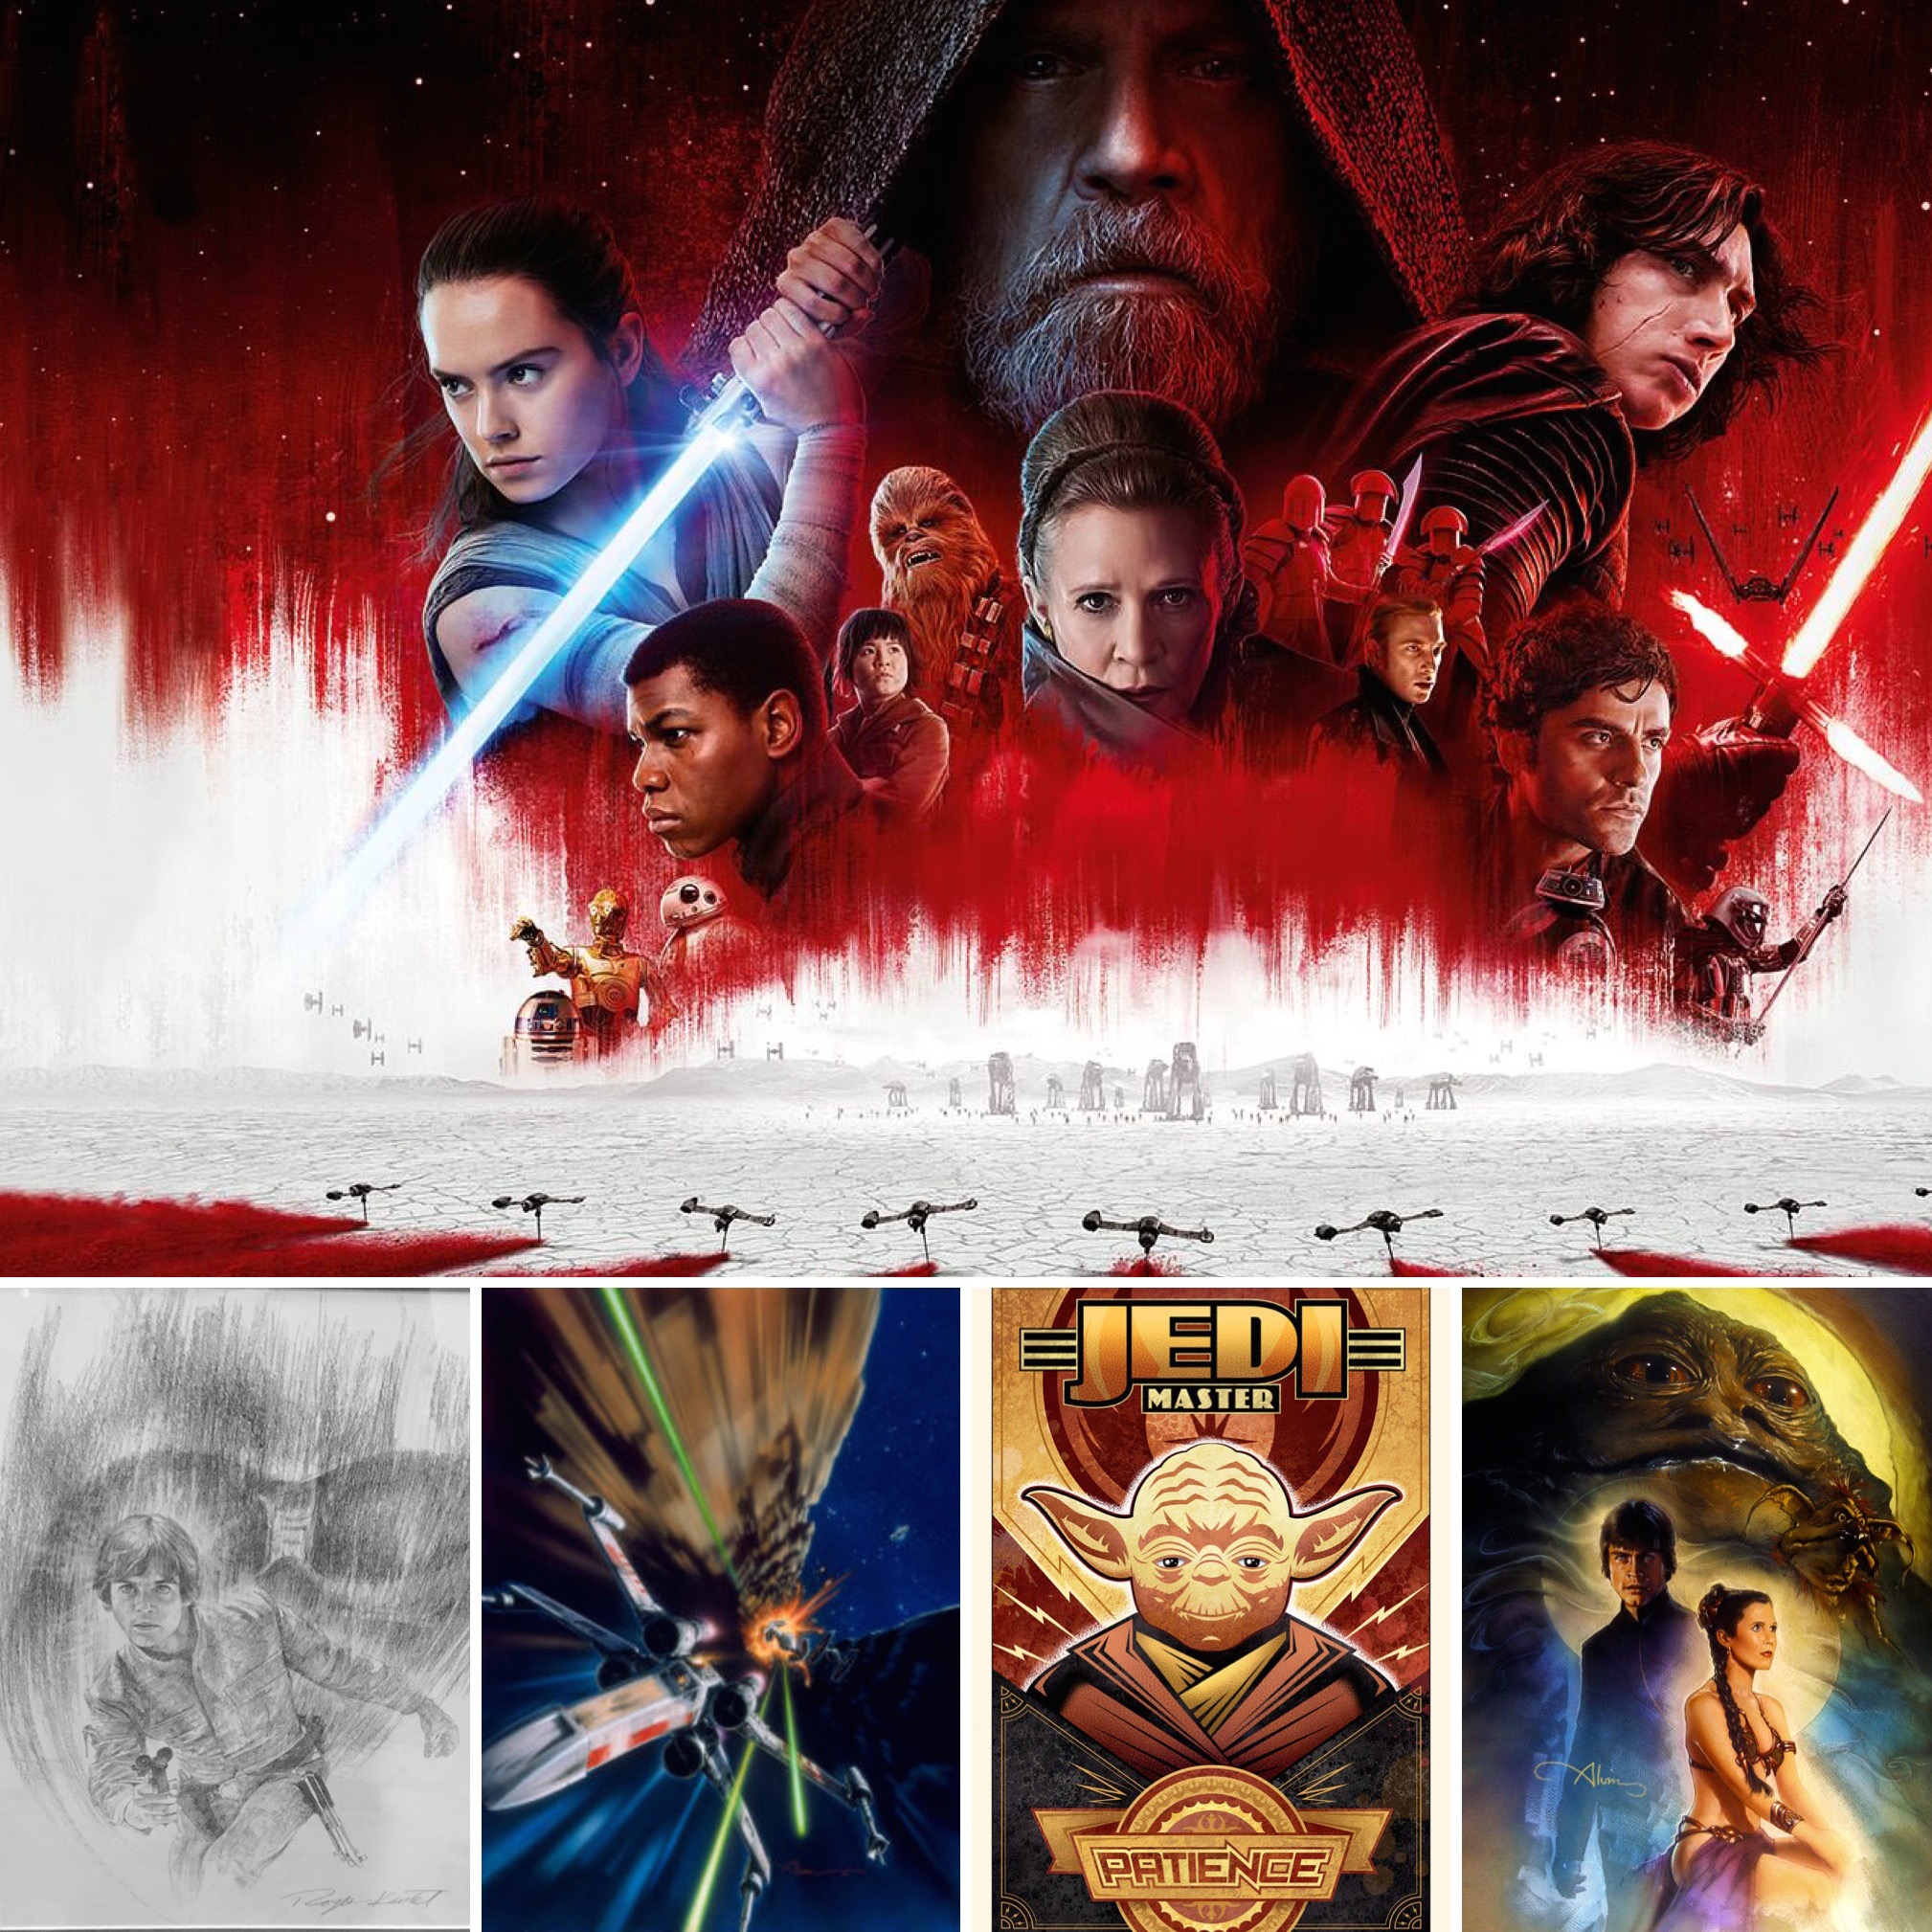 Star Wars - The Last Jedi - film review - MySF Reviews